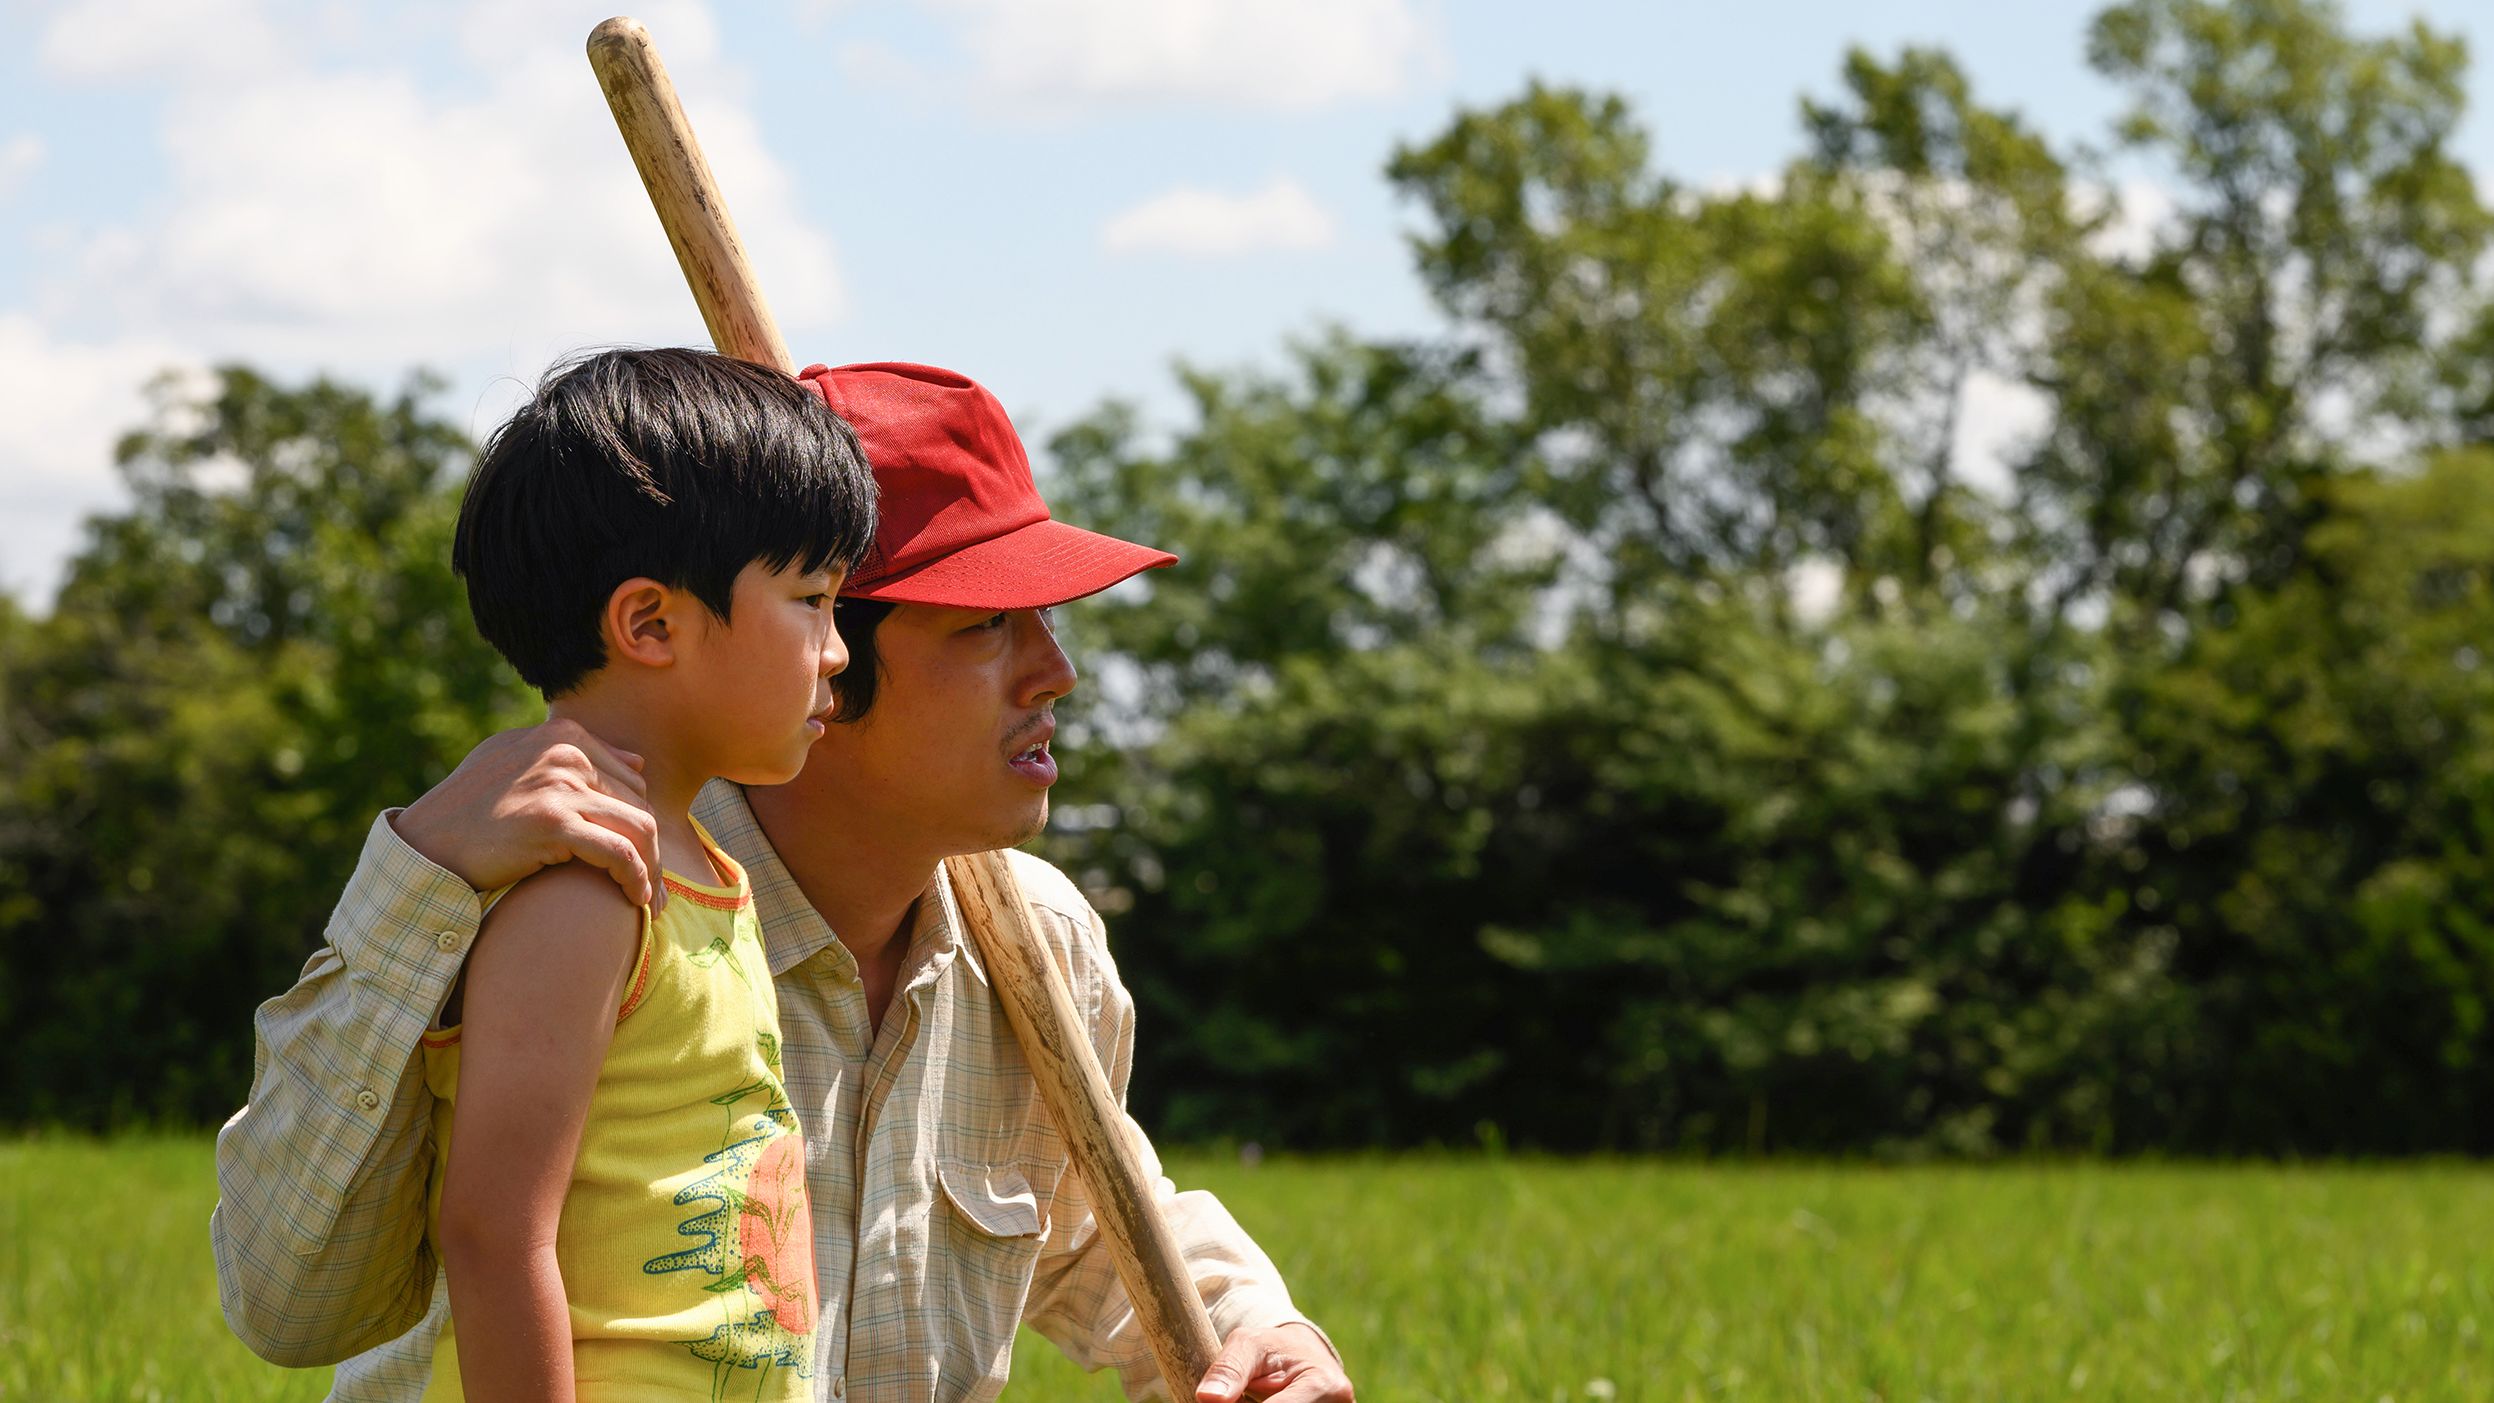 Steven Yeun plays famiy patriarch Jacob Yi in "Minari." Allen S. Kim plays his son, David. 